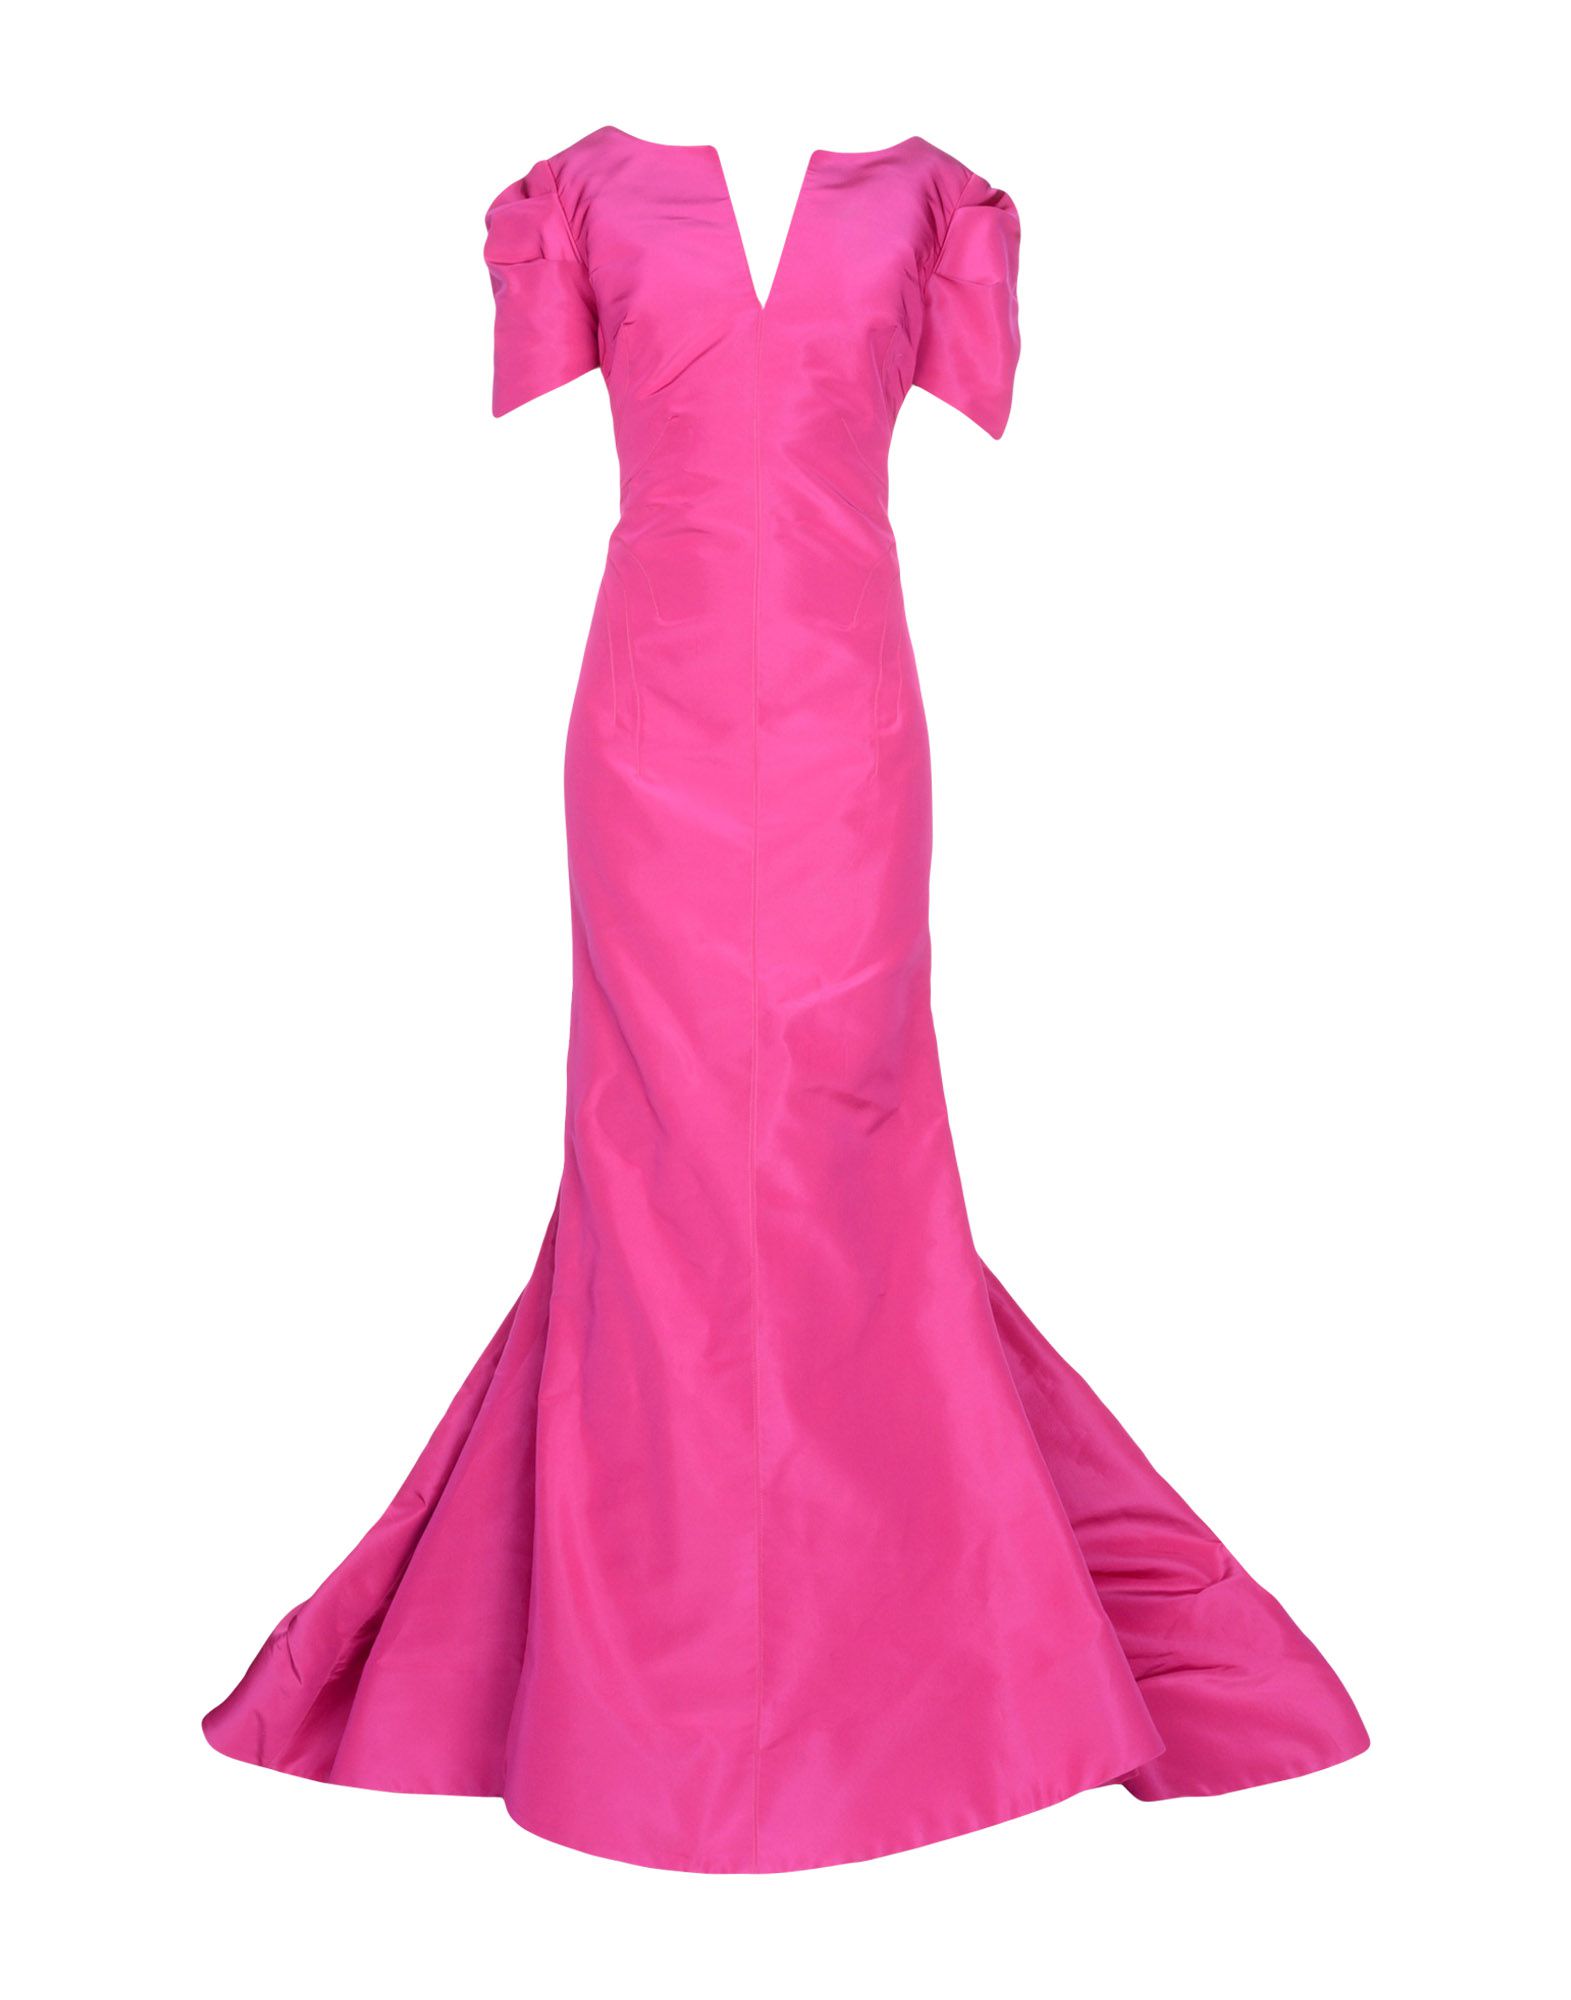 ZAC POSEN Formal dress,34842439IX 8